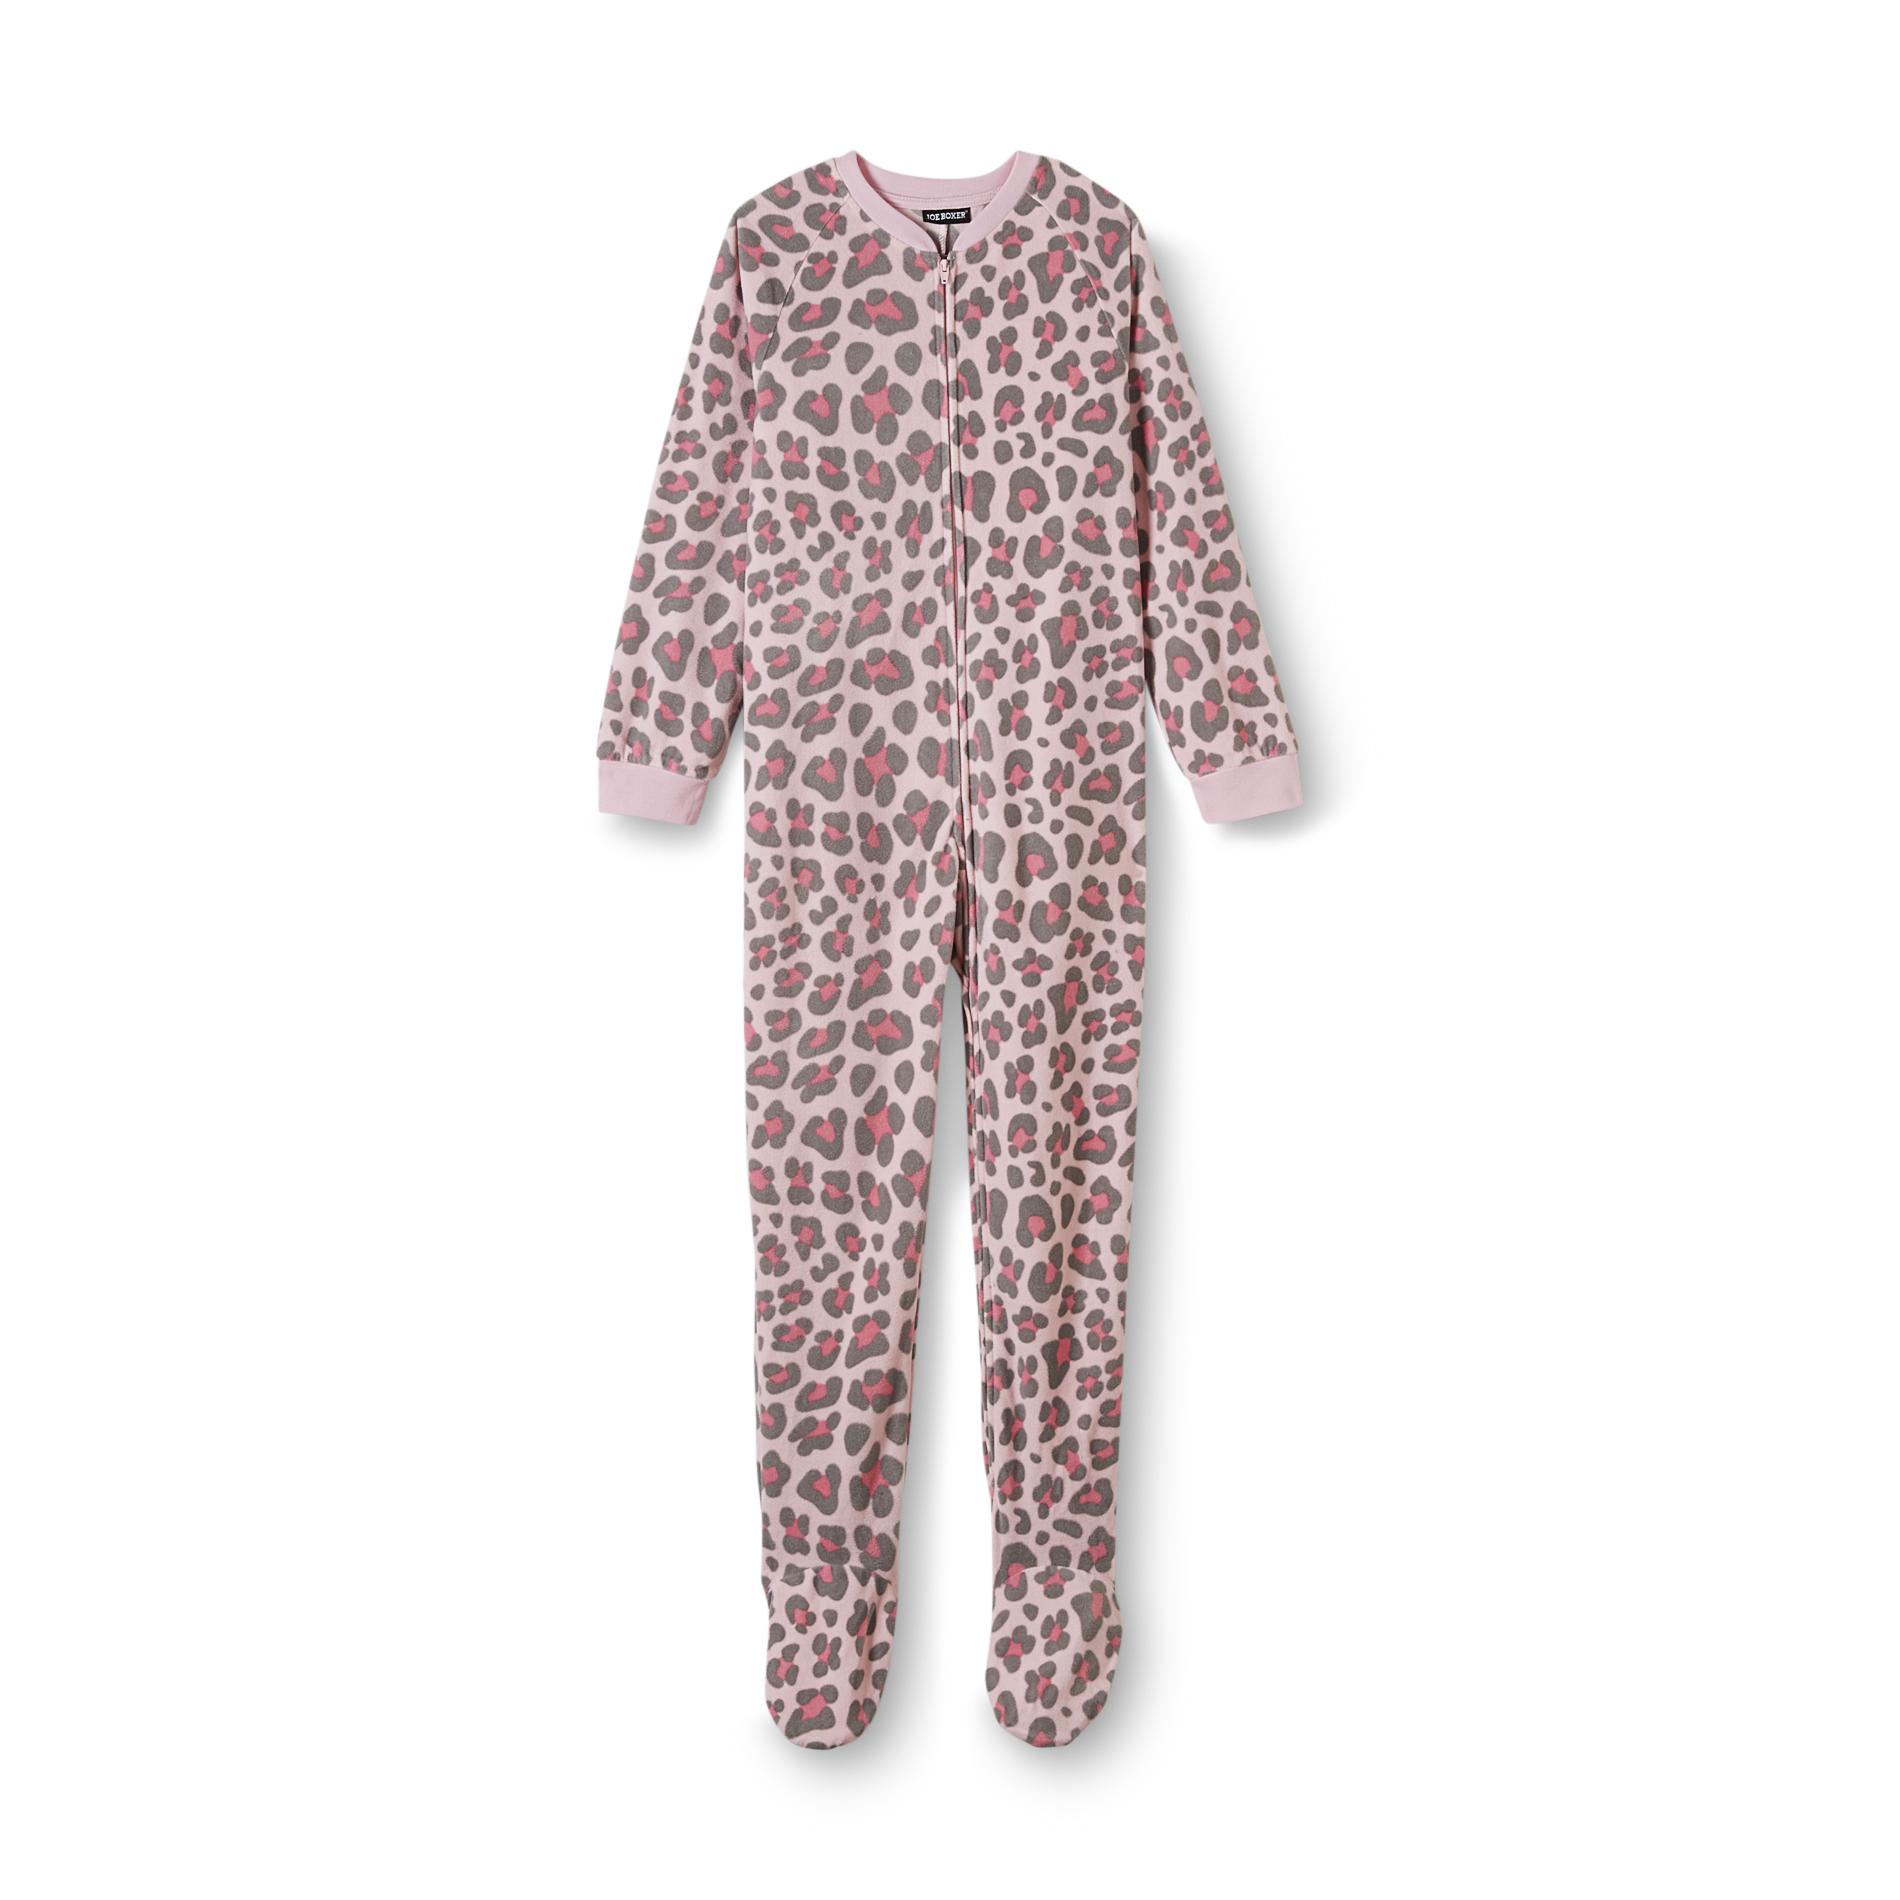 Joe Boxer Girl's Footed Fleece Pajamas - Leopard